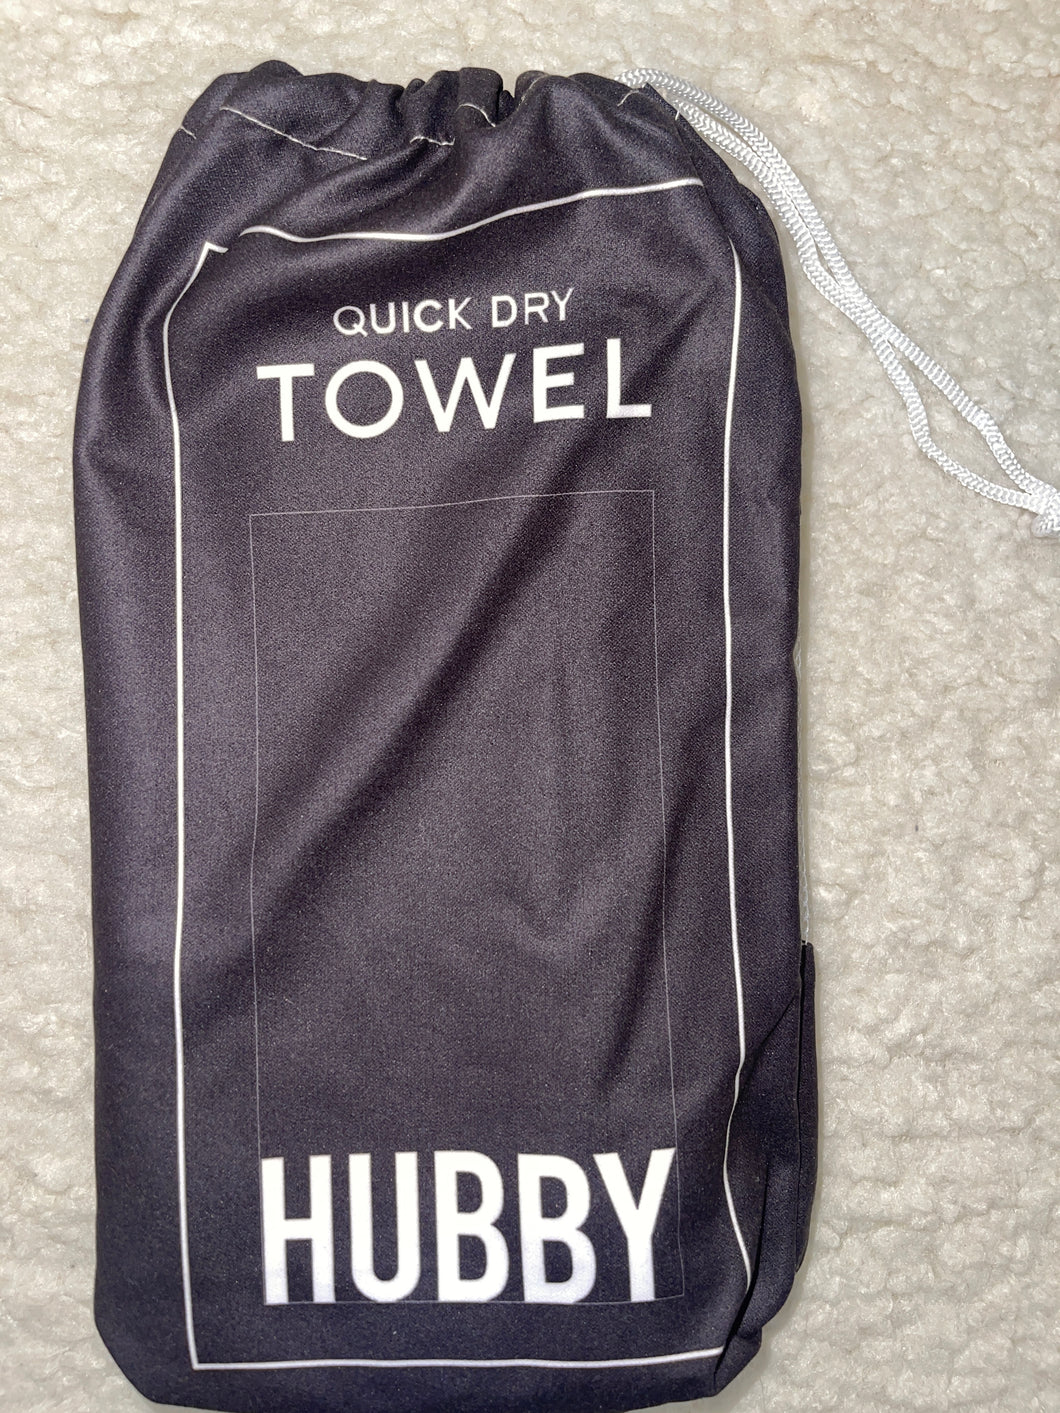 Hubby Quick Dry Towel